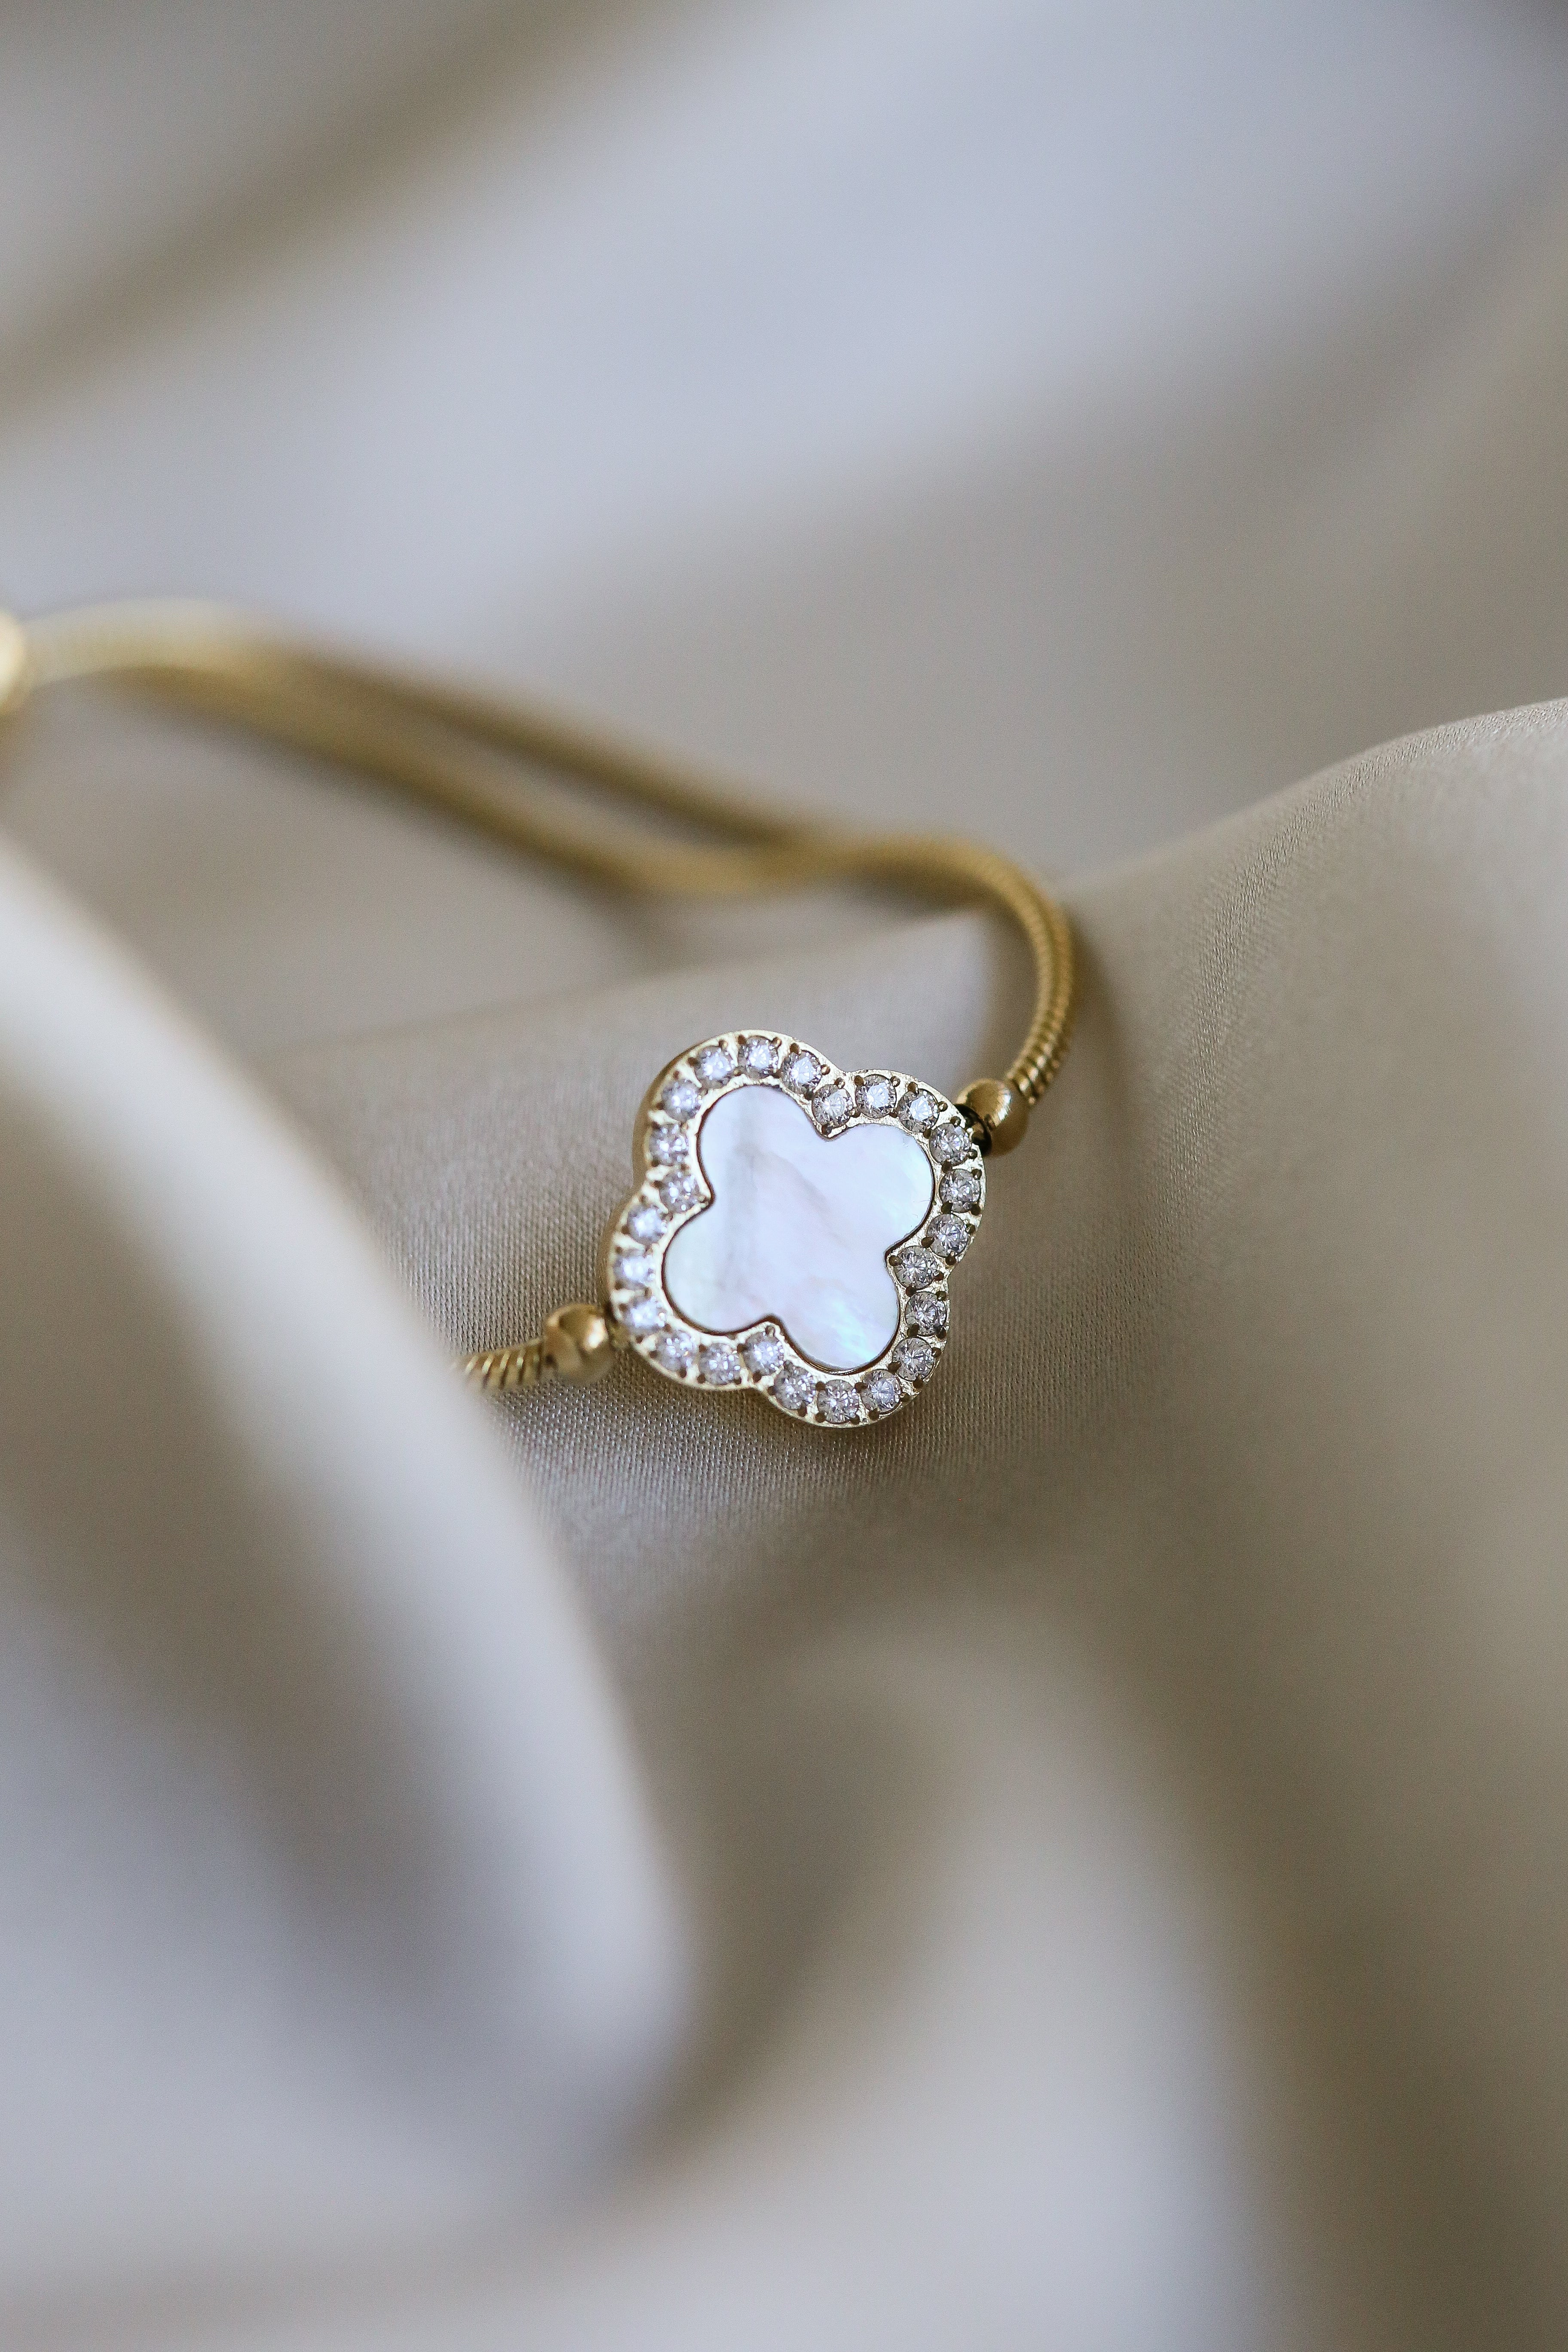 Mila Bracelet - Boutique Minimaliste has waterproof, durable, elegant and vintage inspired jewelry